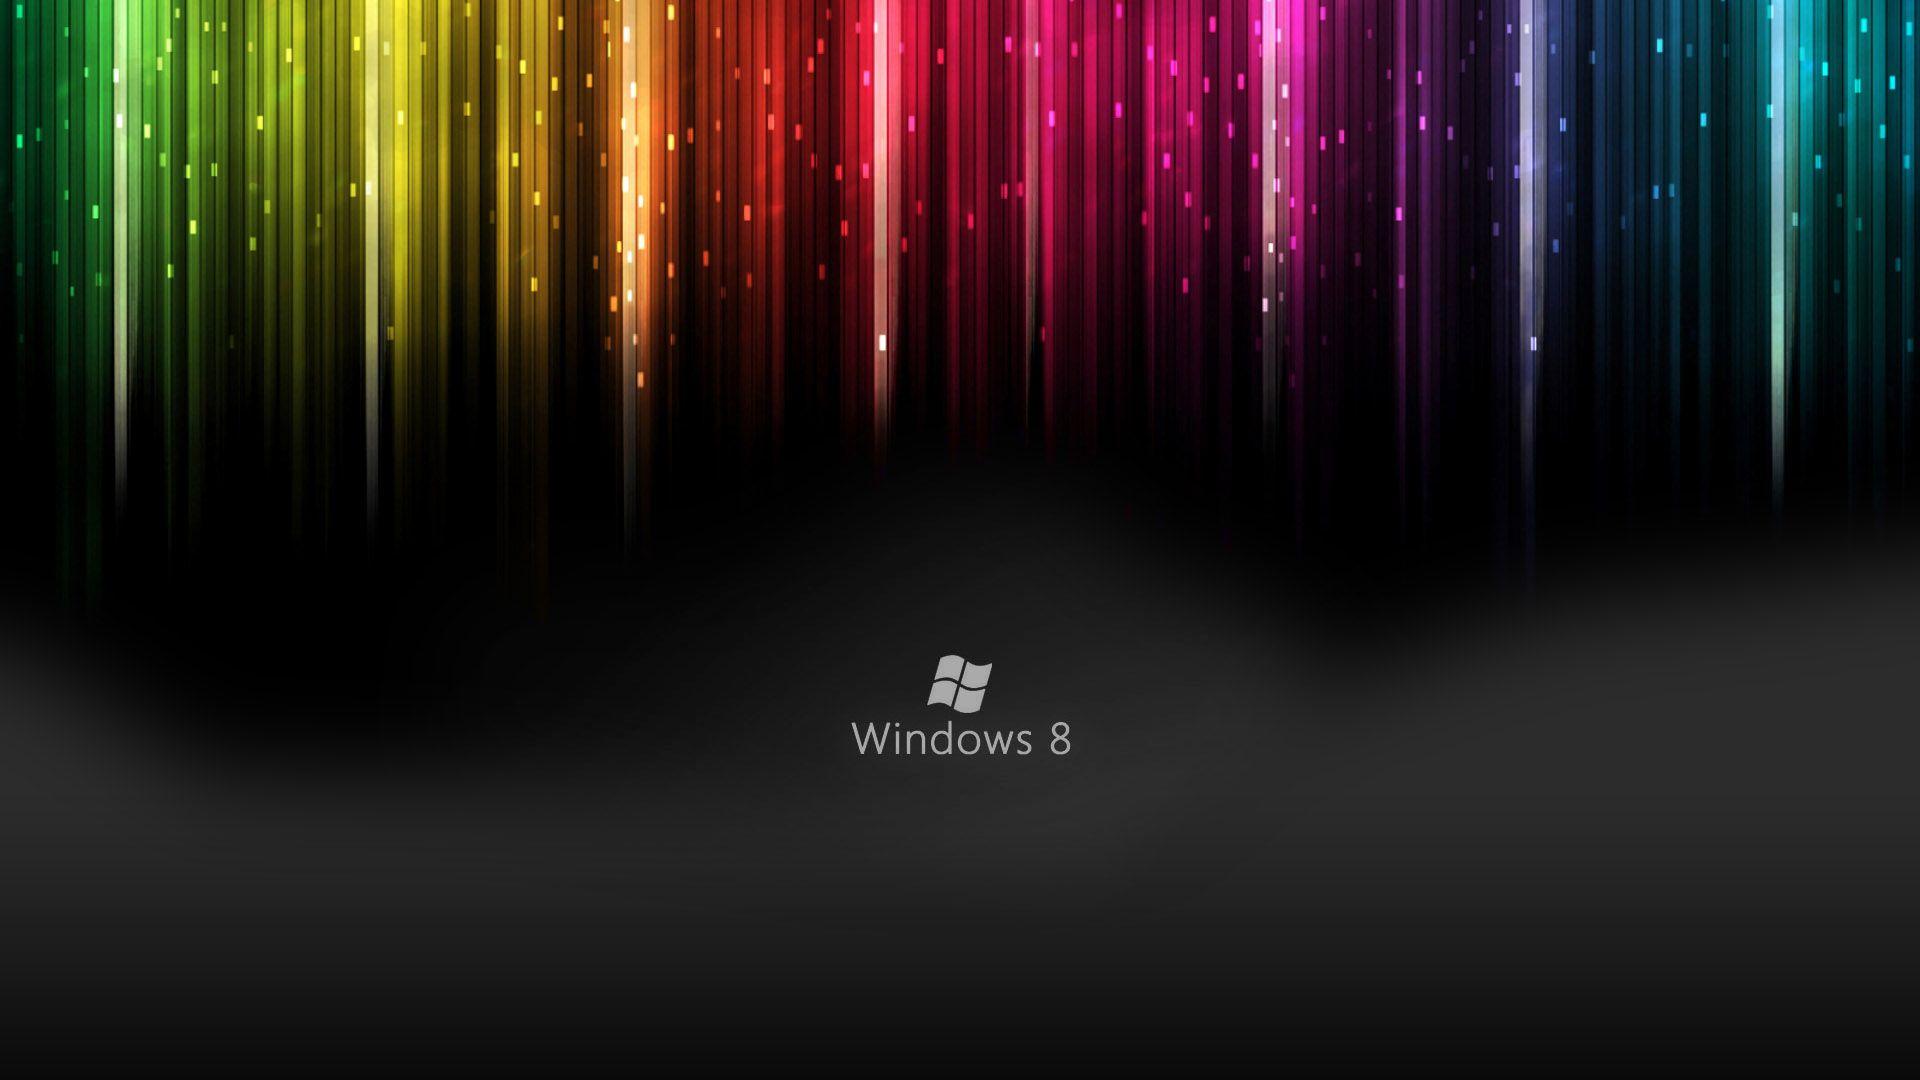 Windows 8 Live Wallpaper HD Wallpaper of Windows